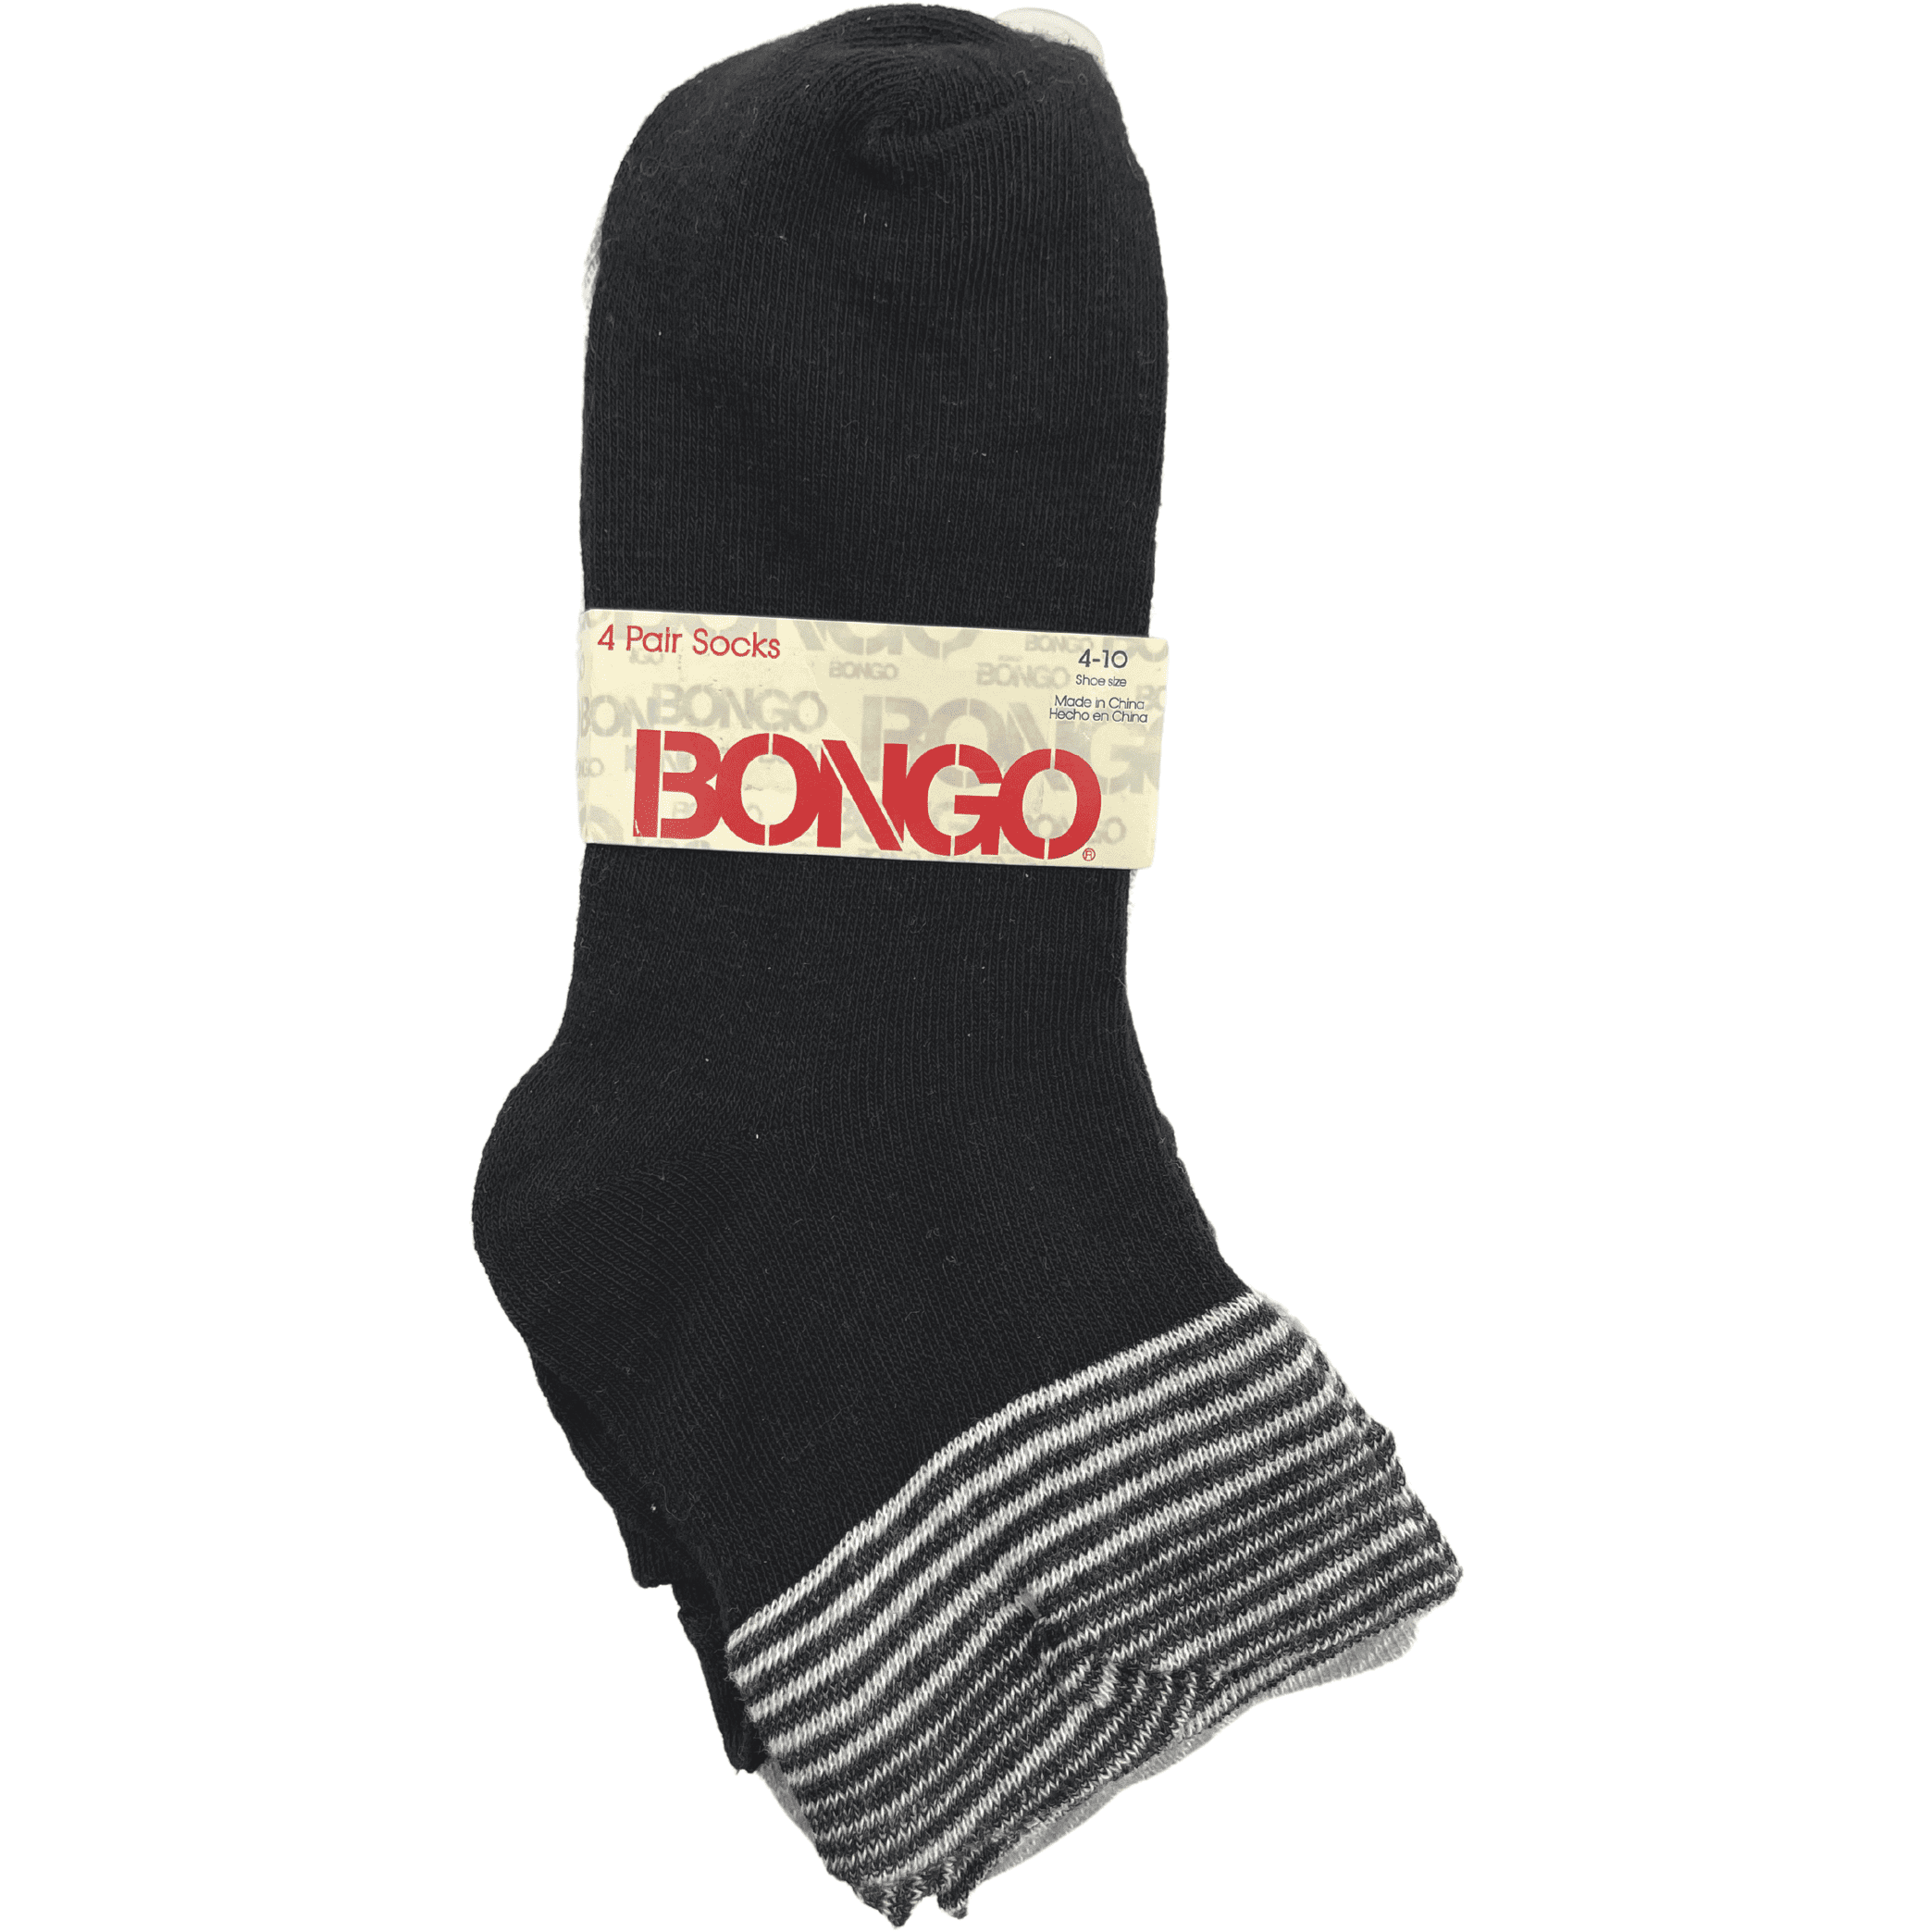 Bongo Women's Socks / Ankle Socks / 4 Pairs / Neutral Colours / Shoe Size 4-10